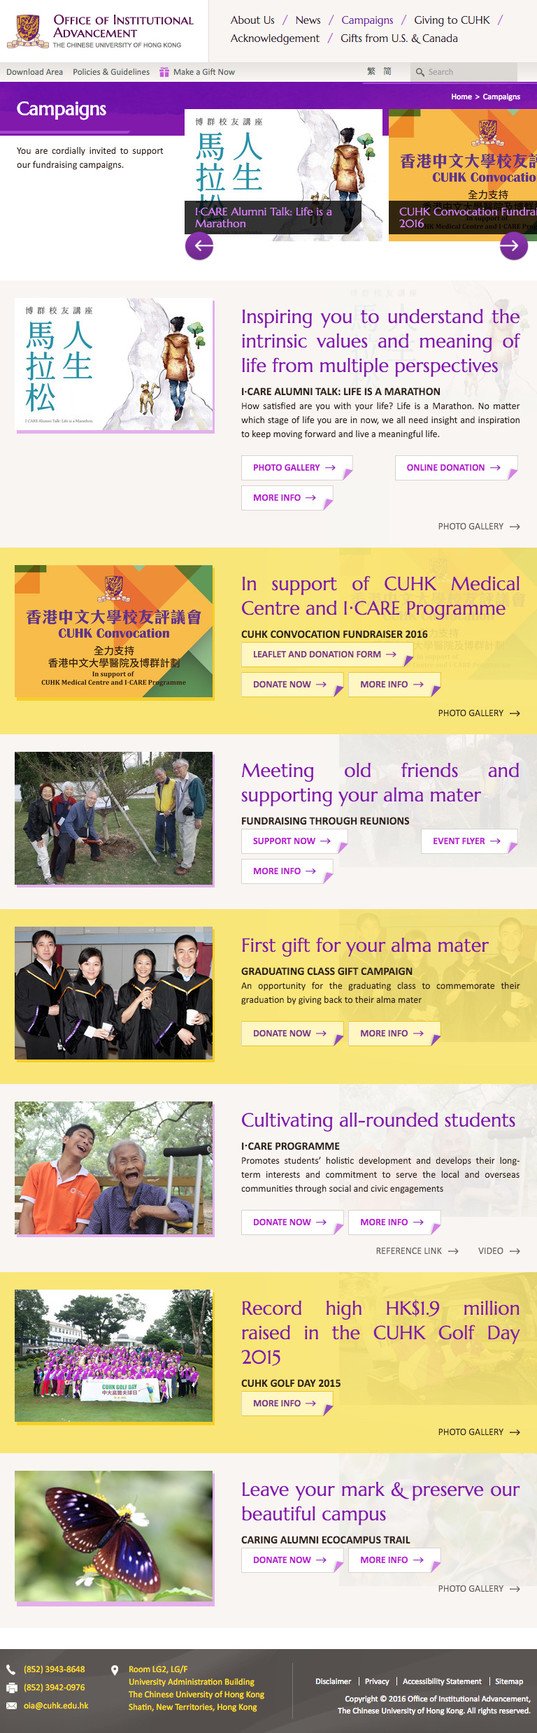 Chinese University of Hong Kong website screenshot for tablet version 2 of 5